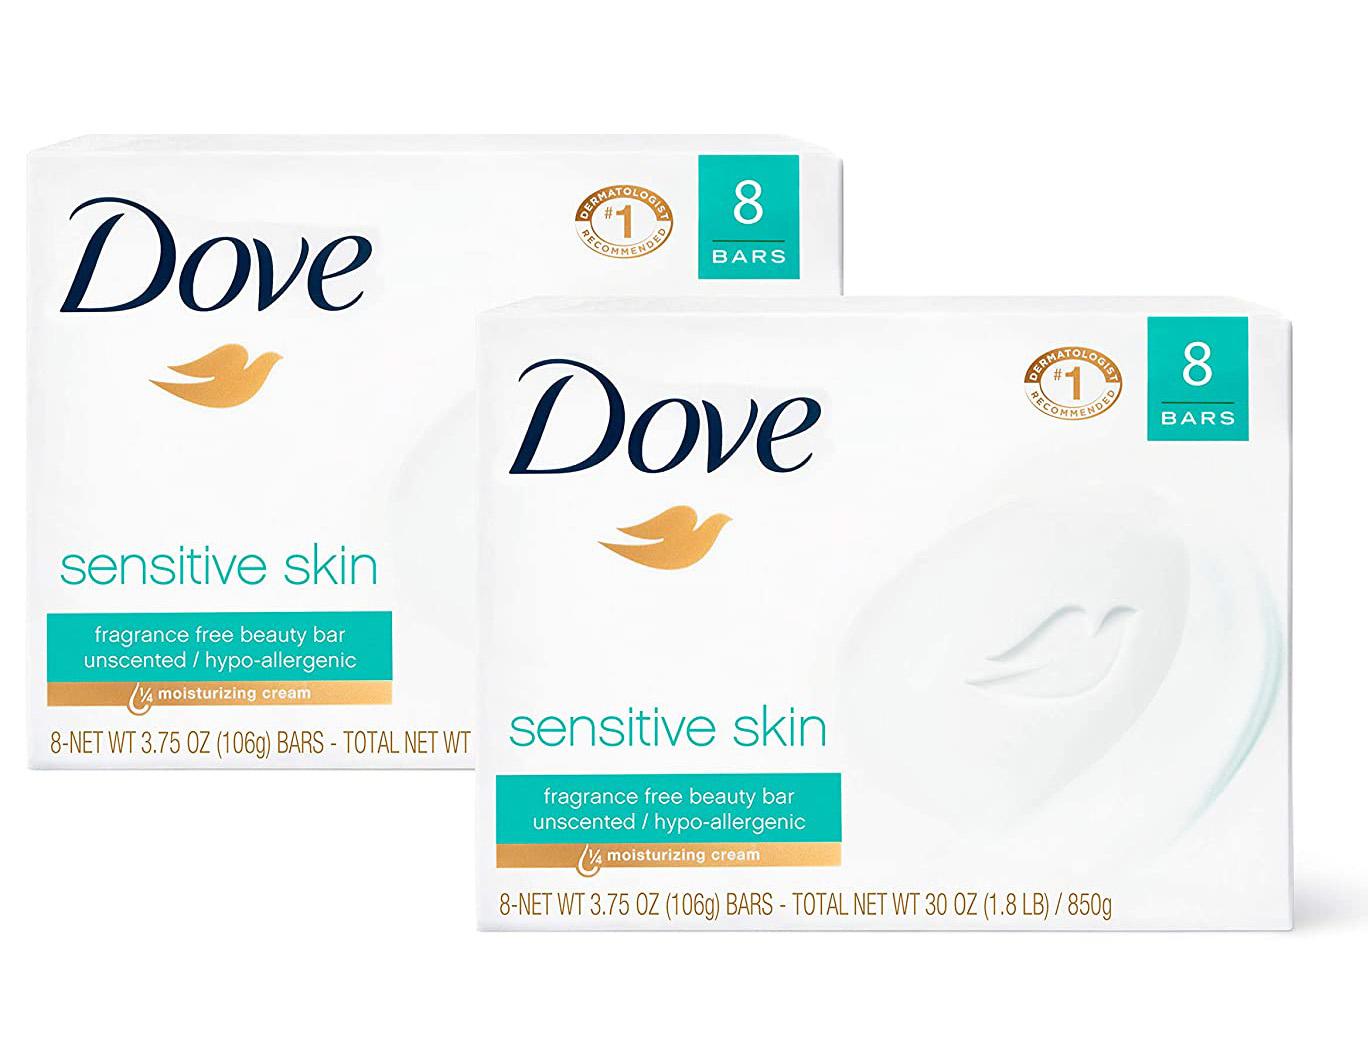 16 Dove Sensitive SkinBeauty Bars for $11.19 Shipped